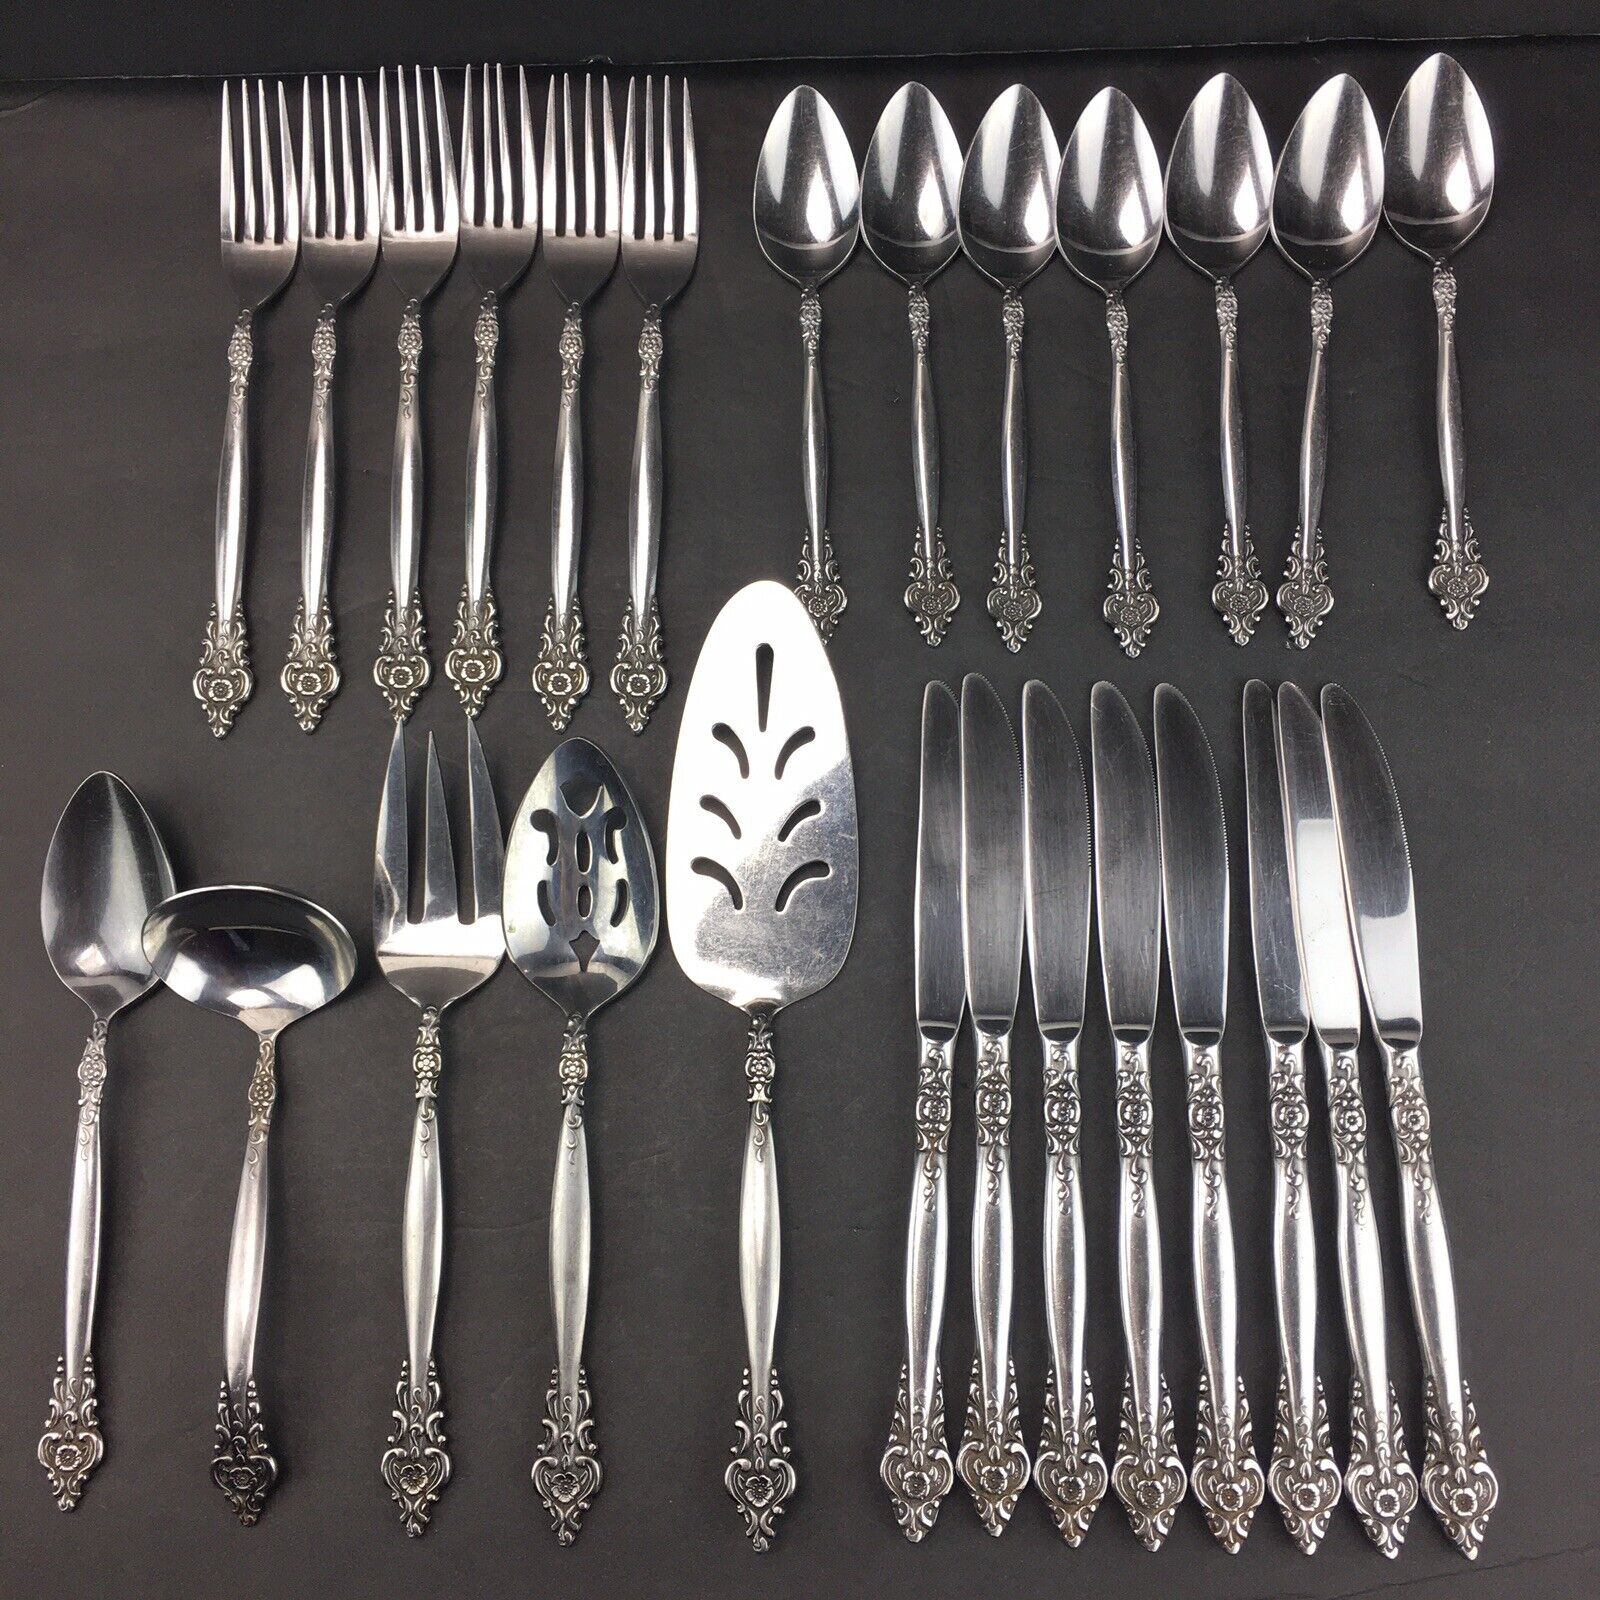 Supreme Cutlery Stainless Forks Spoons Knives Floral Japan Disc VTG Lot of 26